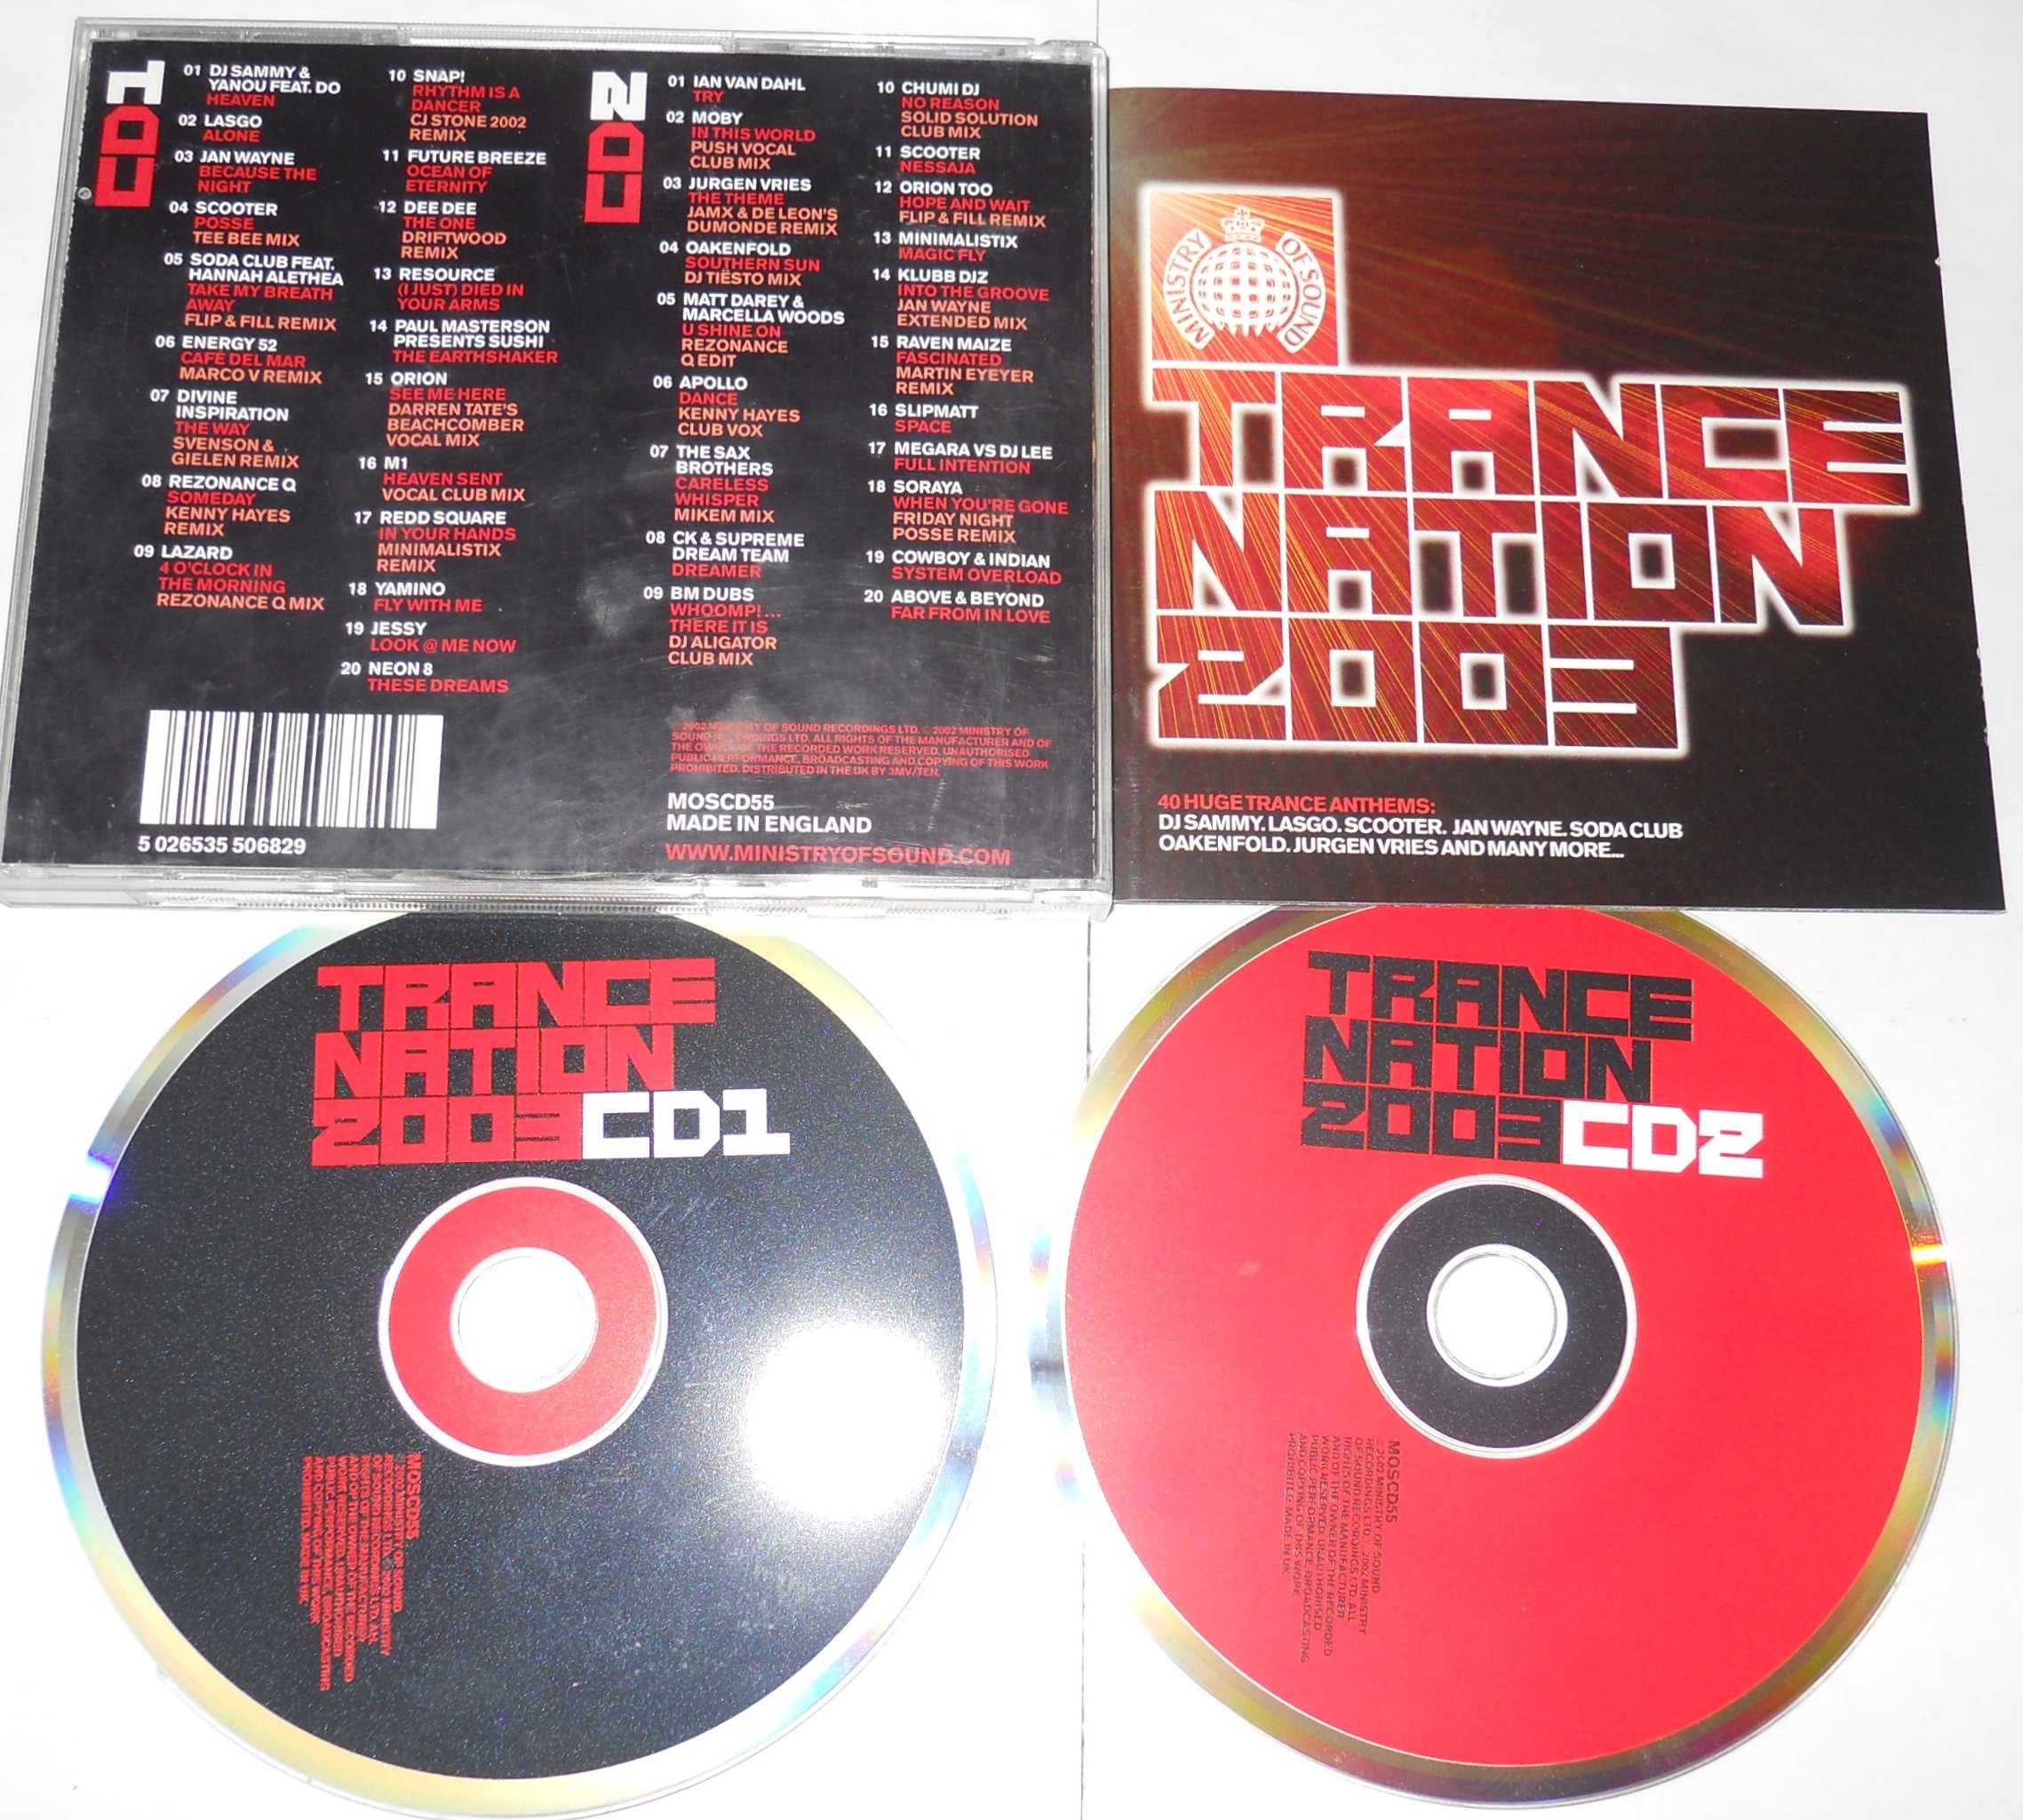 Trance nation 2003